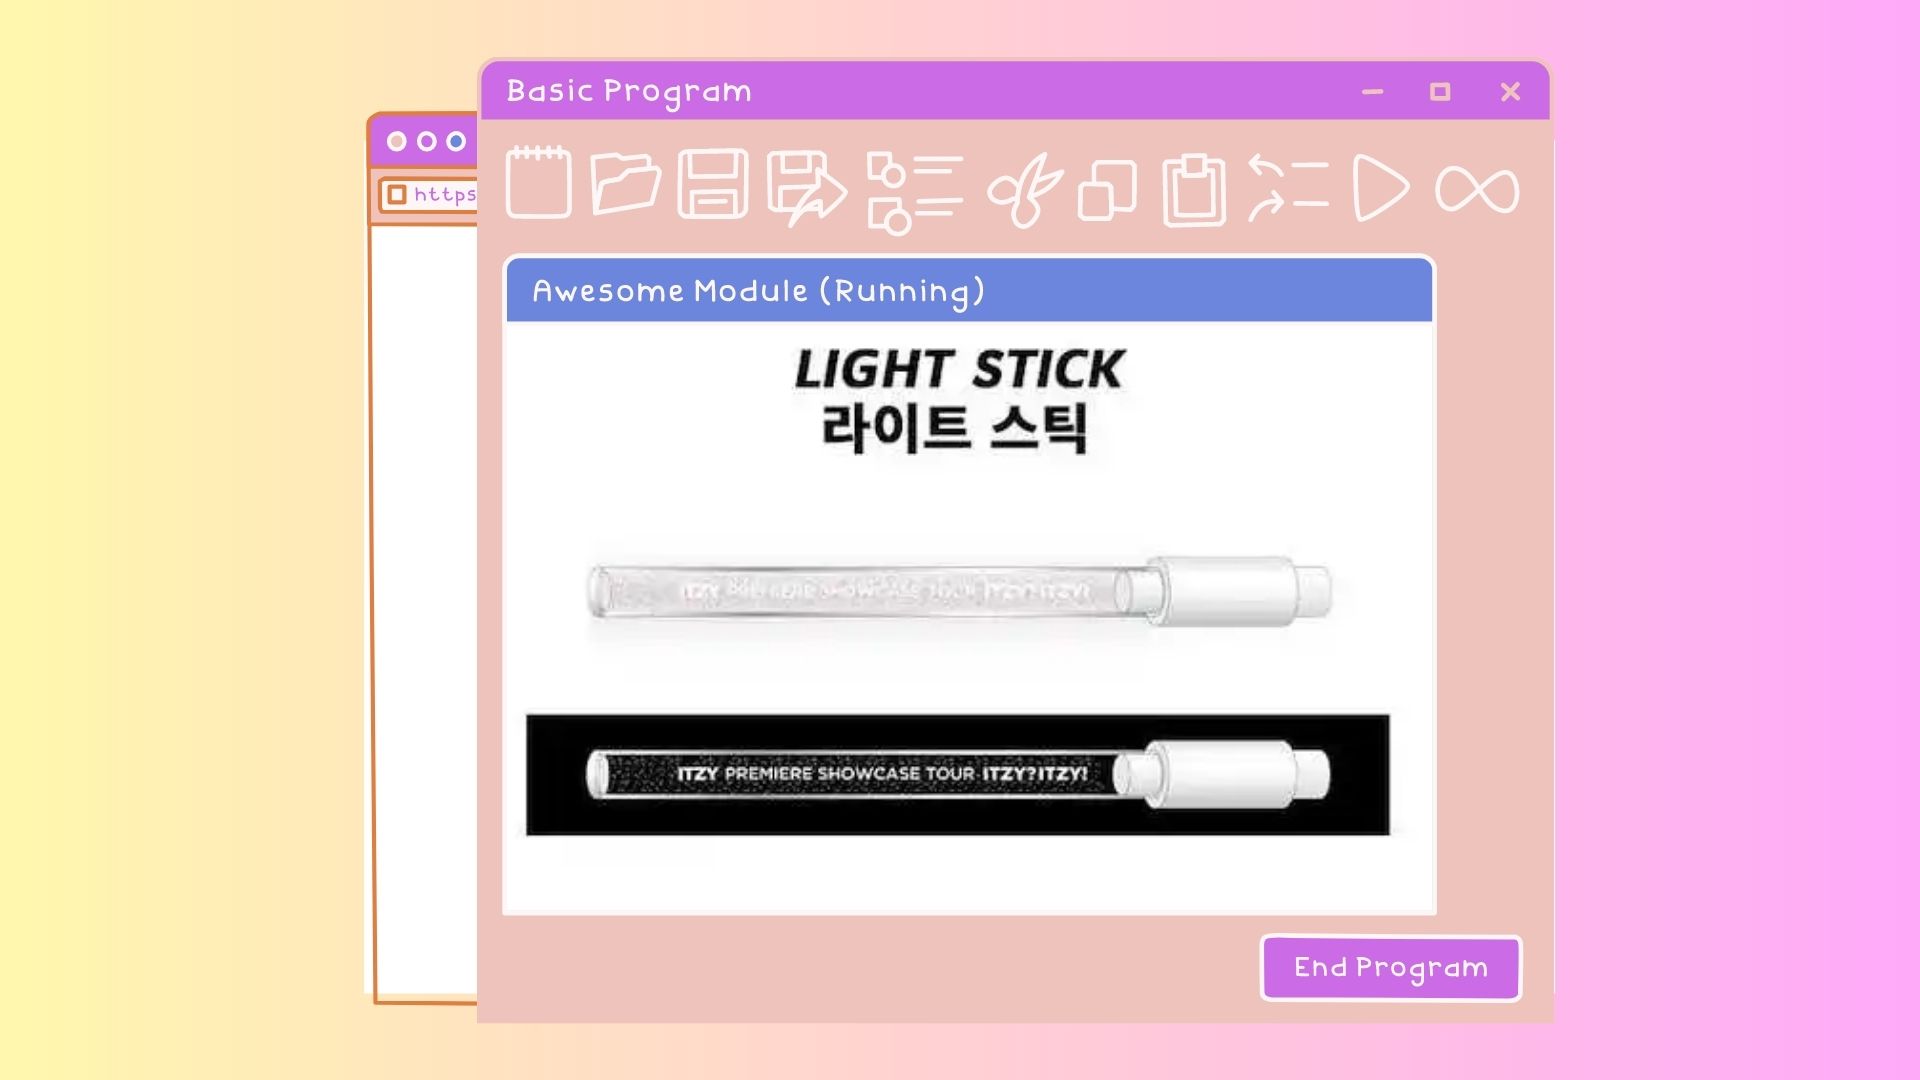 Kpop Lightstick, A Guide To All Kpop Lightsticks + Where To Buy